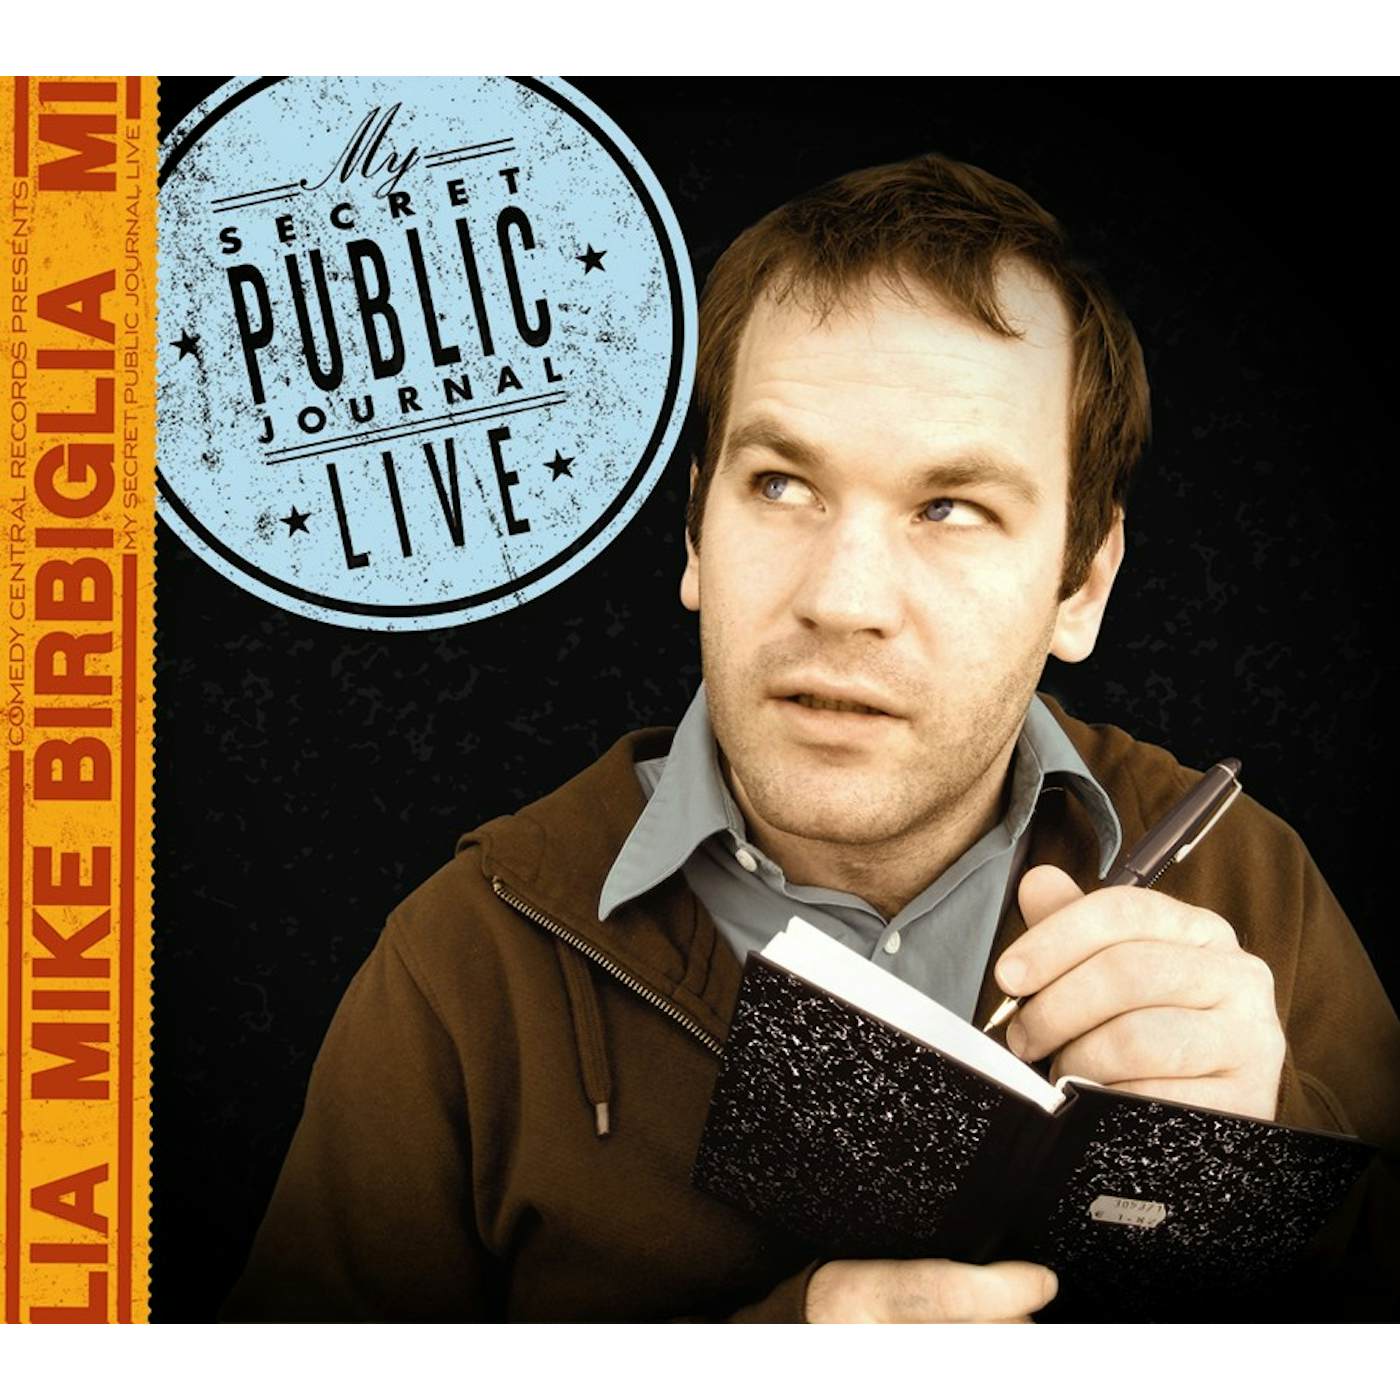 Mike Birbiglia MY SECRET PUBLIC JOURNAL LIVE CD